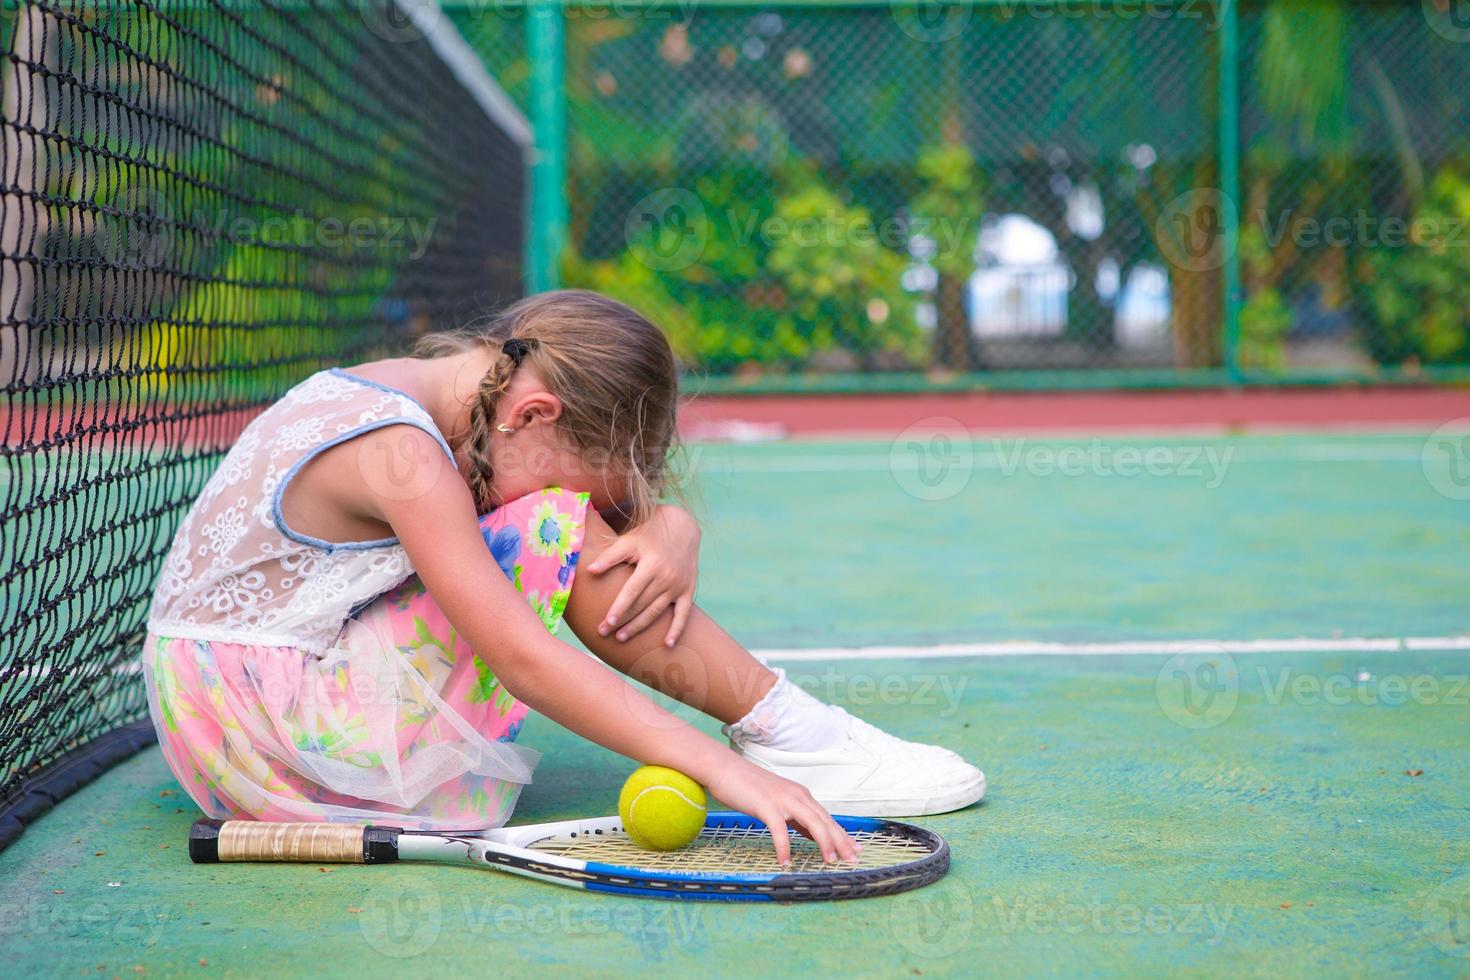 niña triste en la cancha de tenis foto